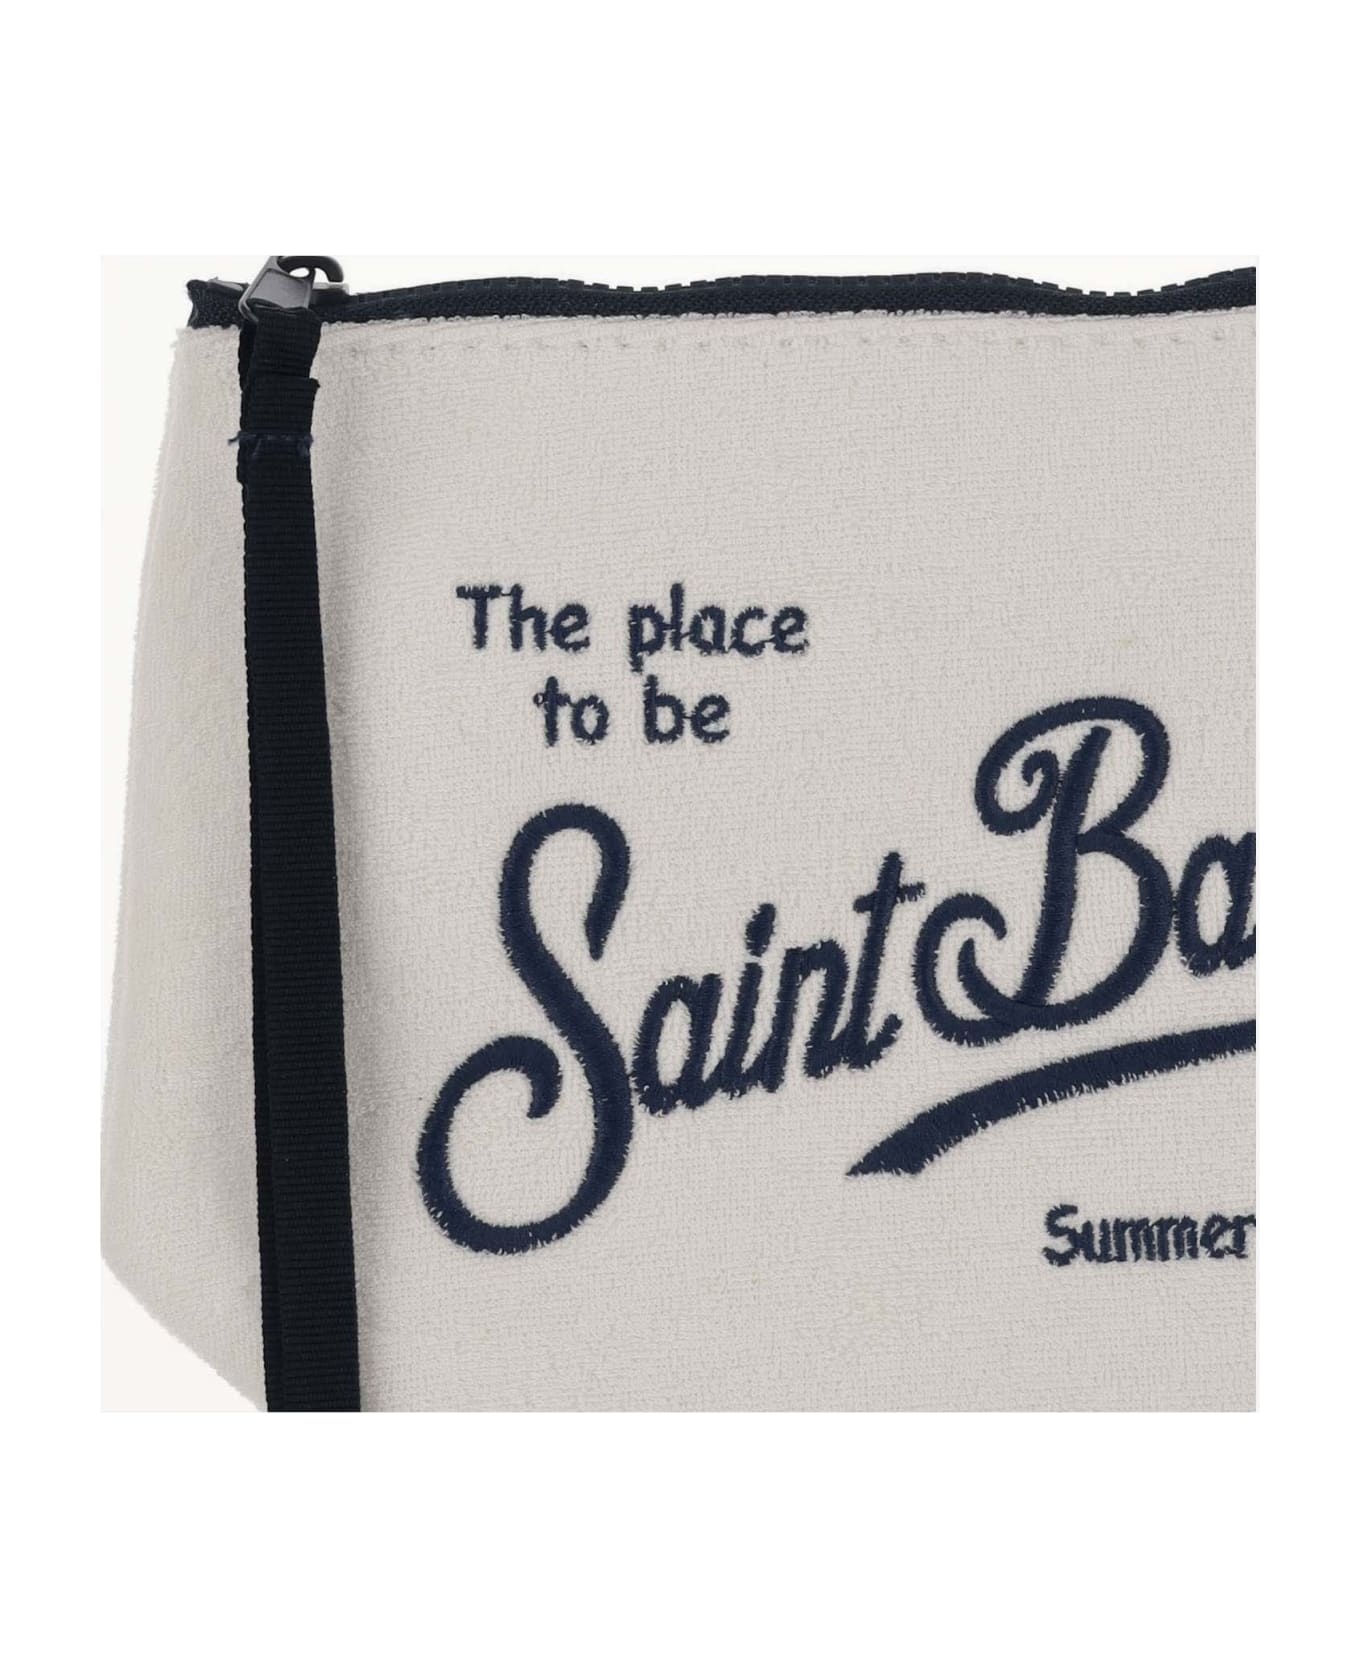 MC2 Saint Barth Fabric Clutch Bag With Logo - White